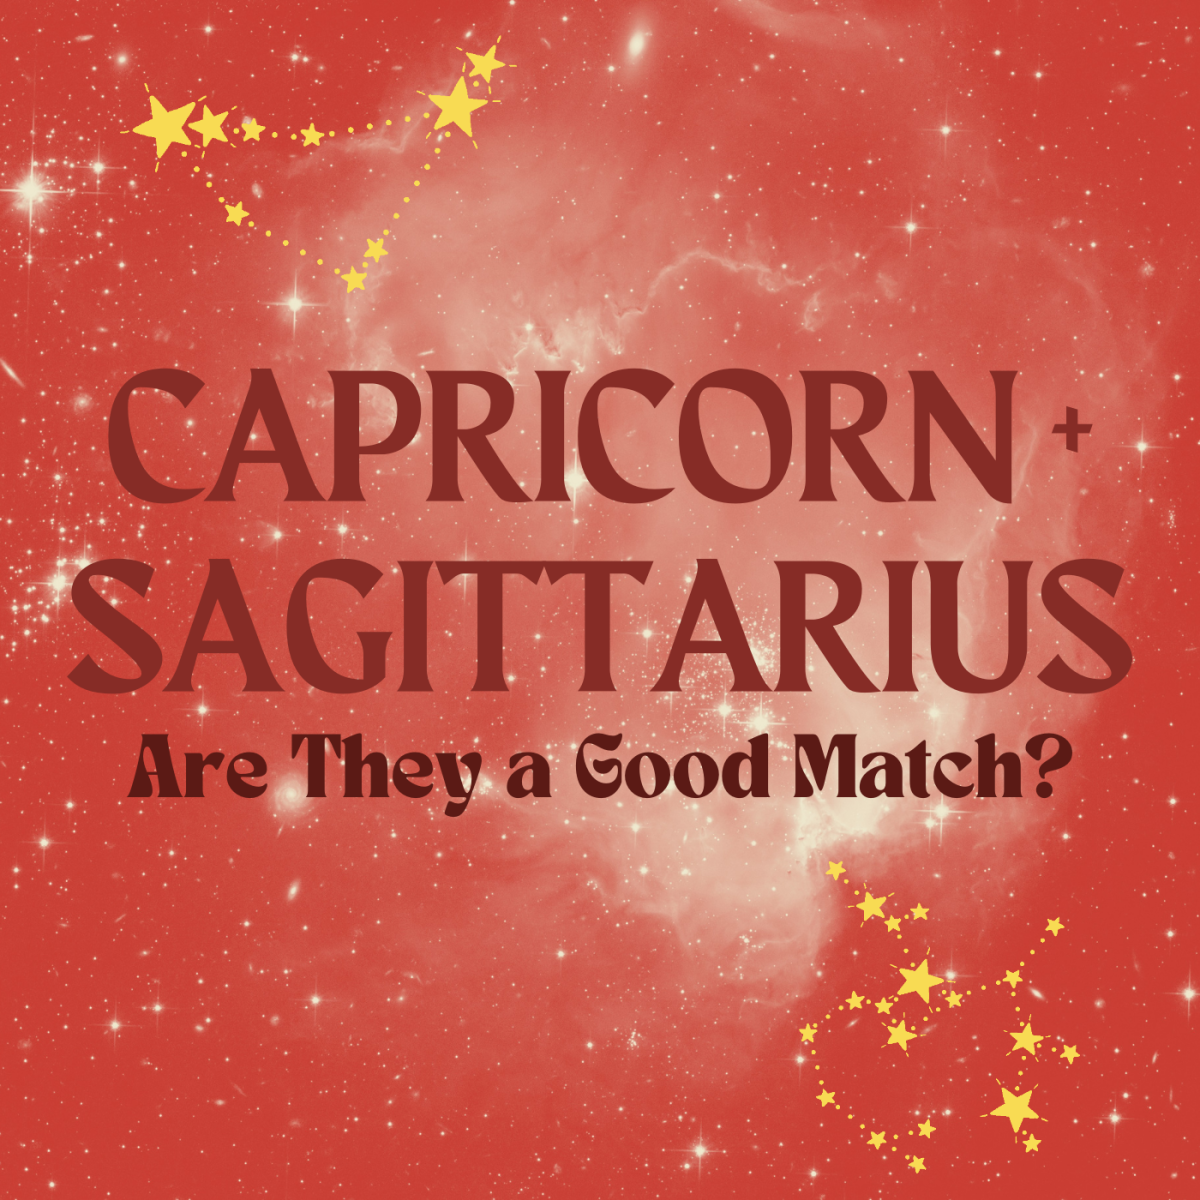 How well do a Sagittarius and a Capricorn get along?